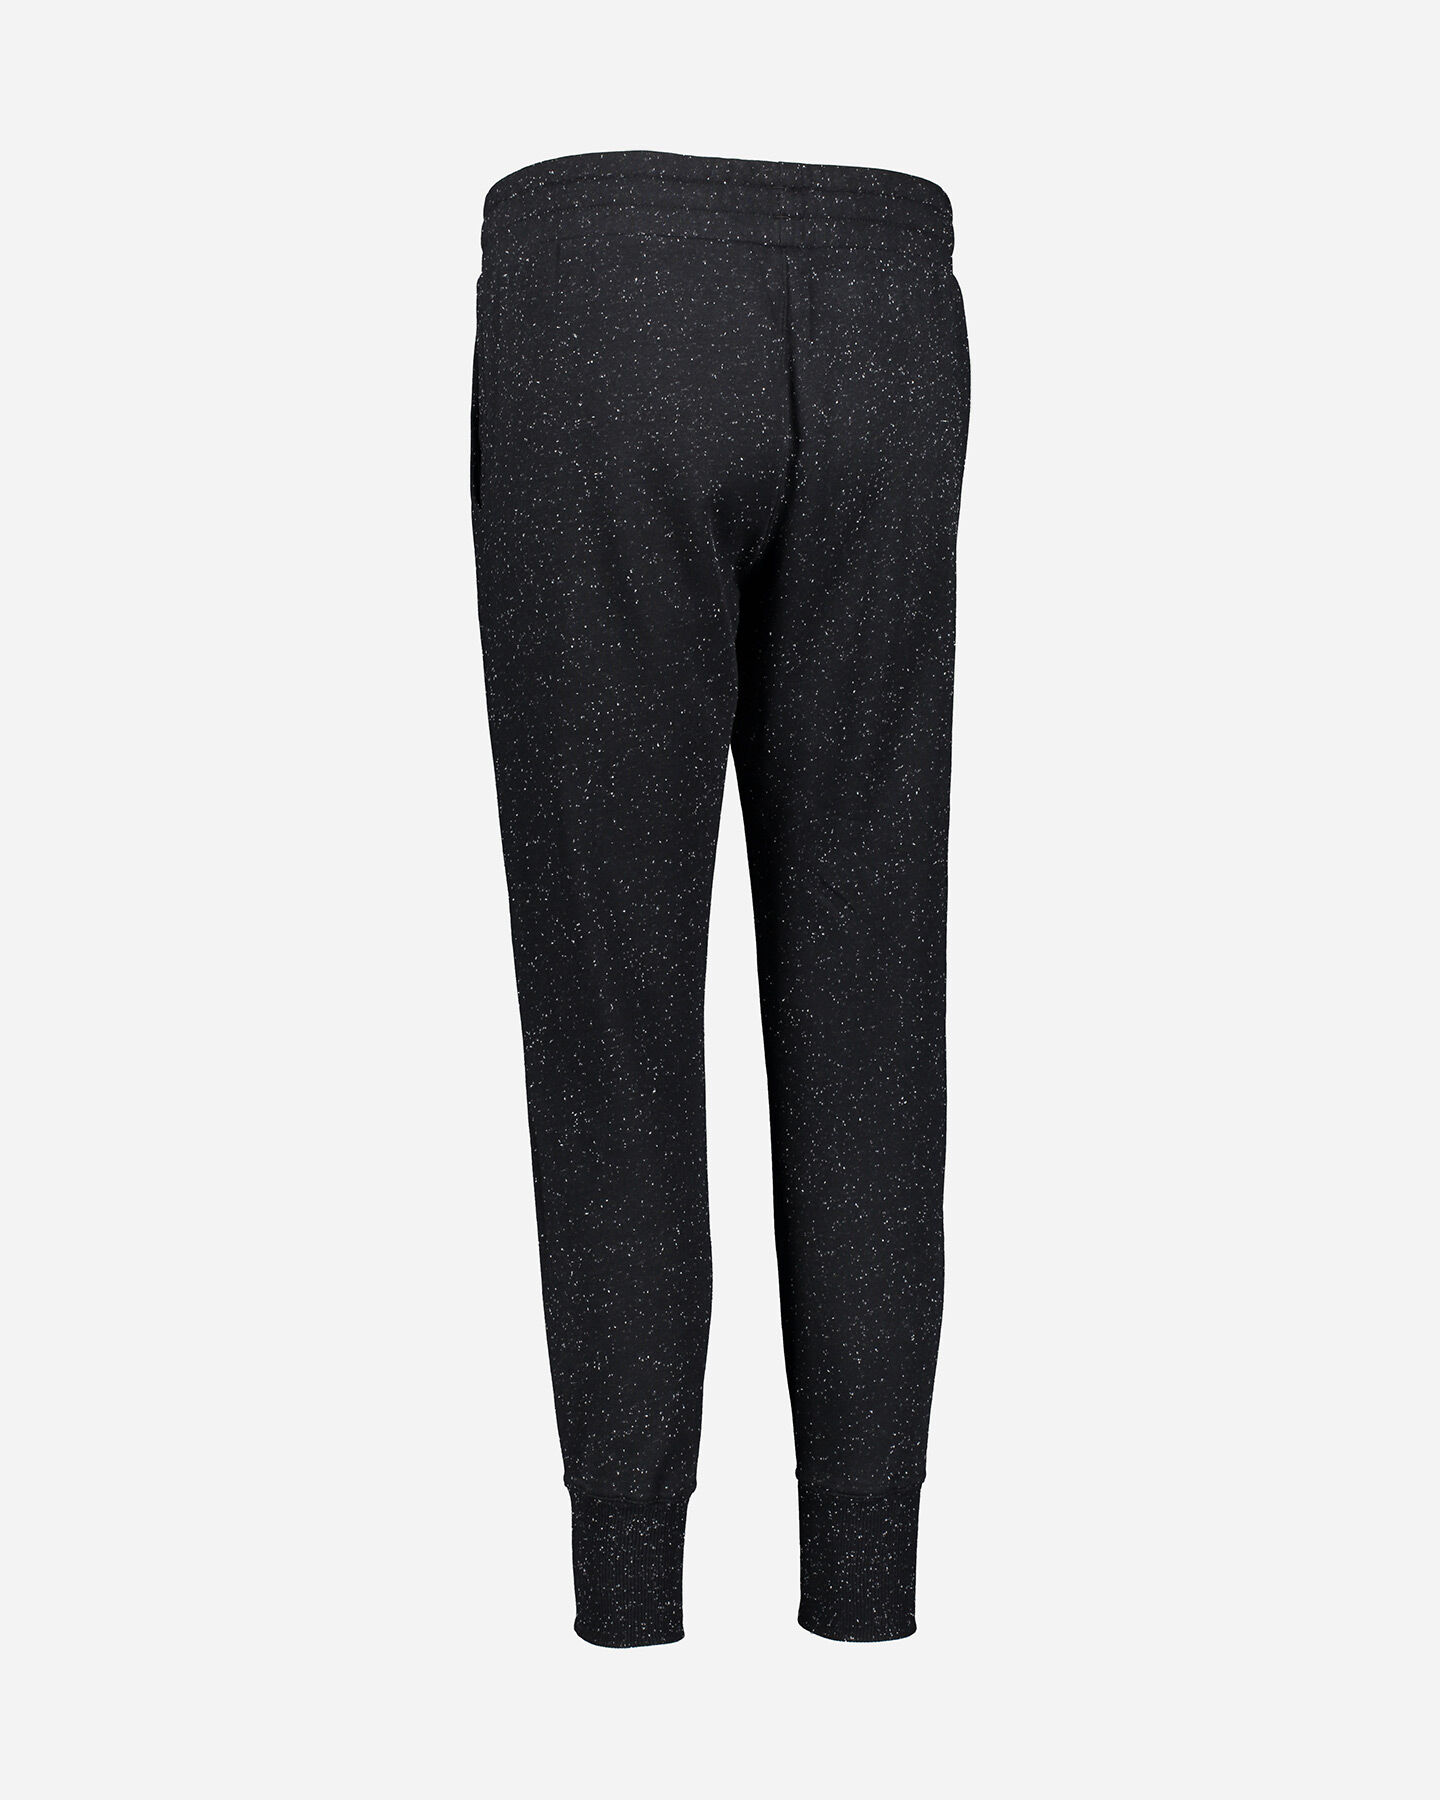  Pantalone UNDER ARMOUR RIVAL FLEECE METALLIC W S5229258|0002|XS scatto 2